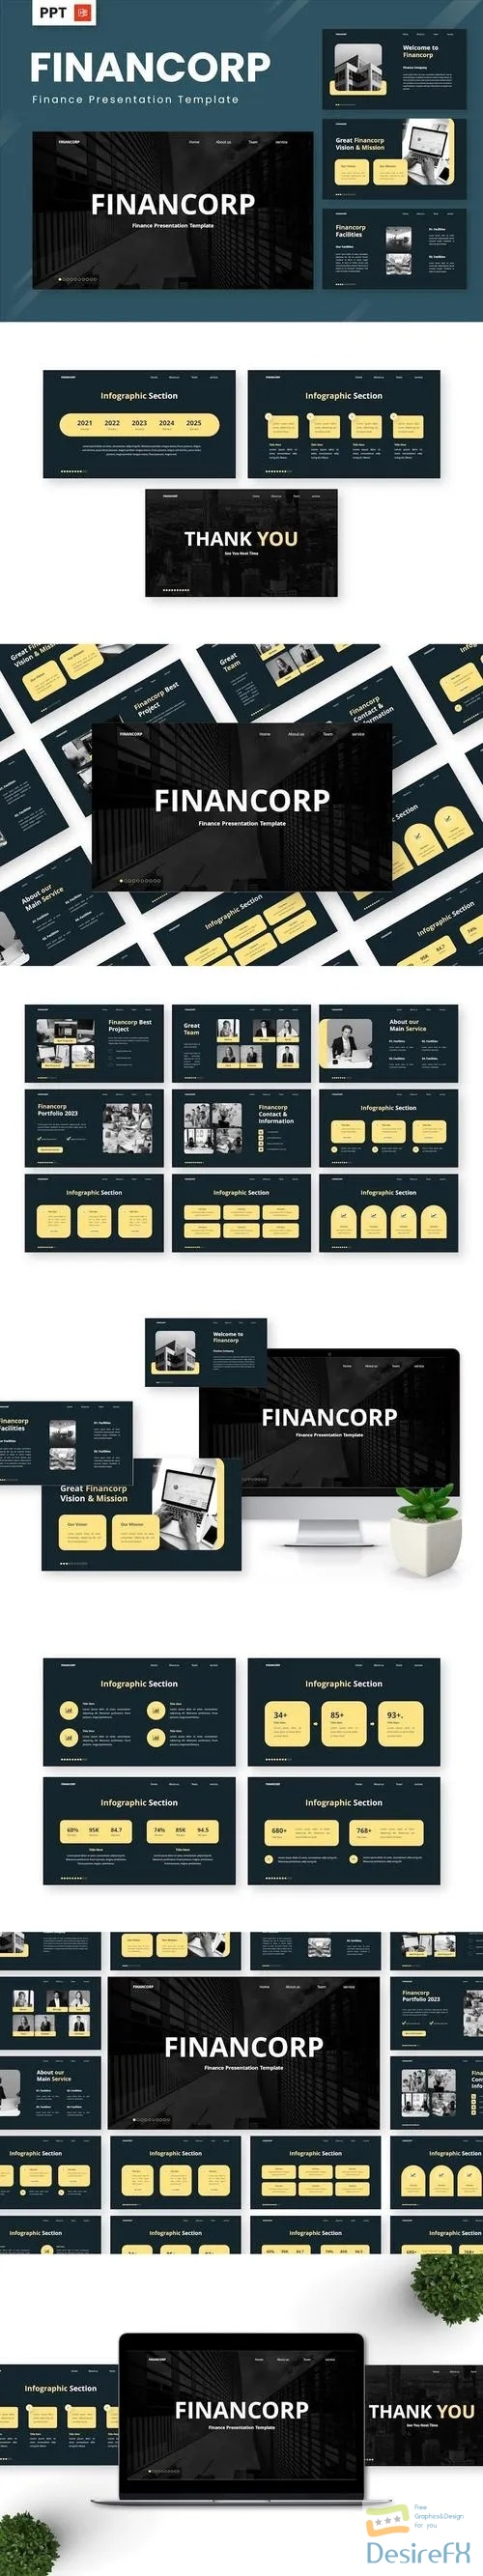 Financorp - Finance Powerpoint Templates